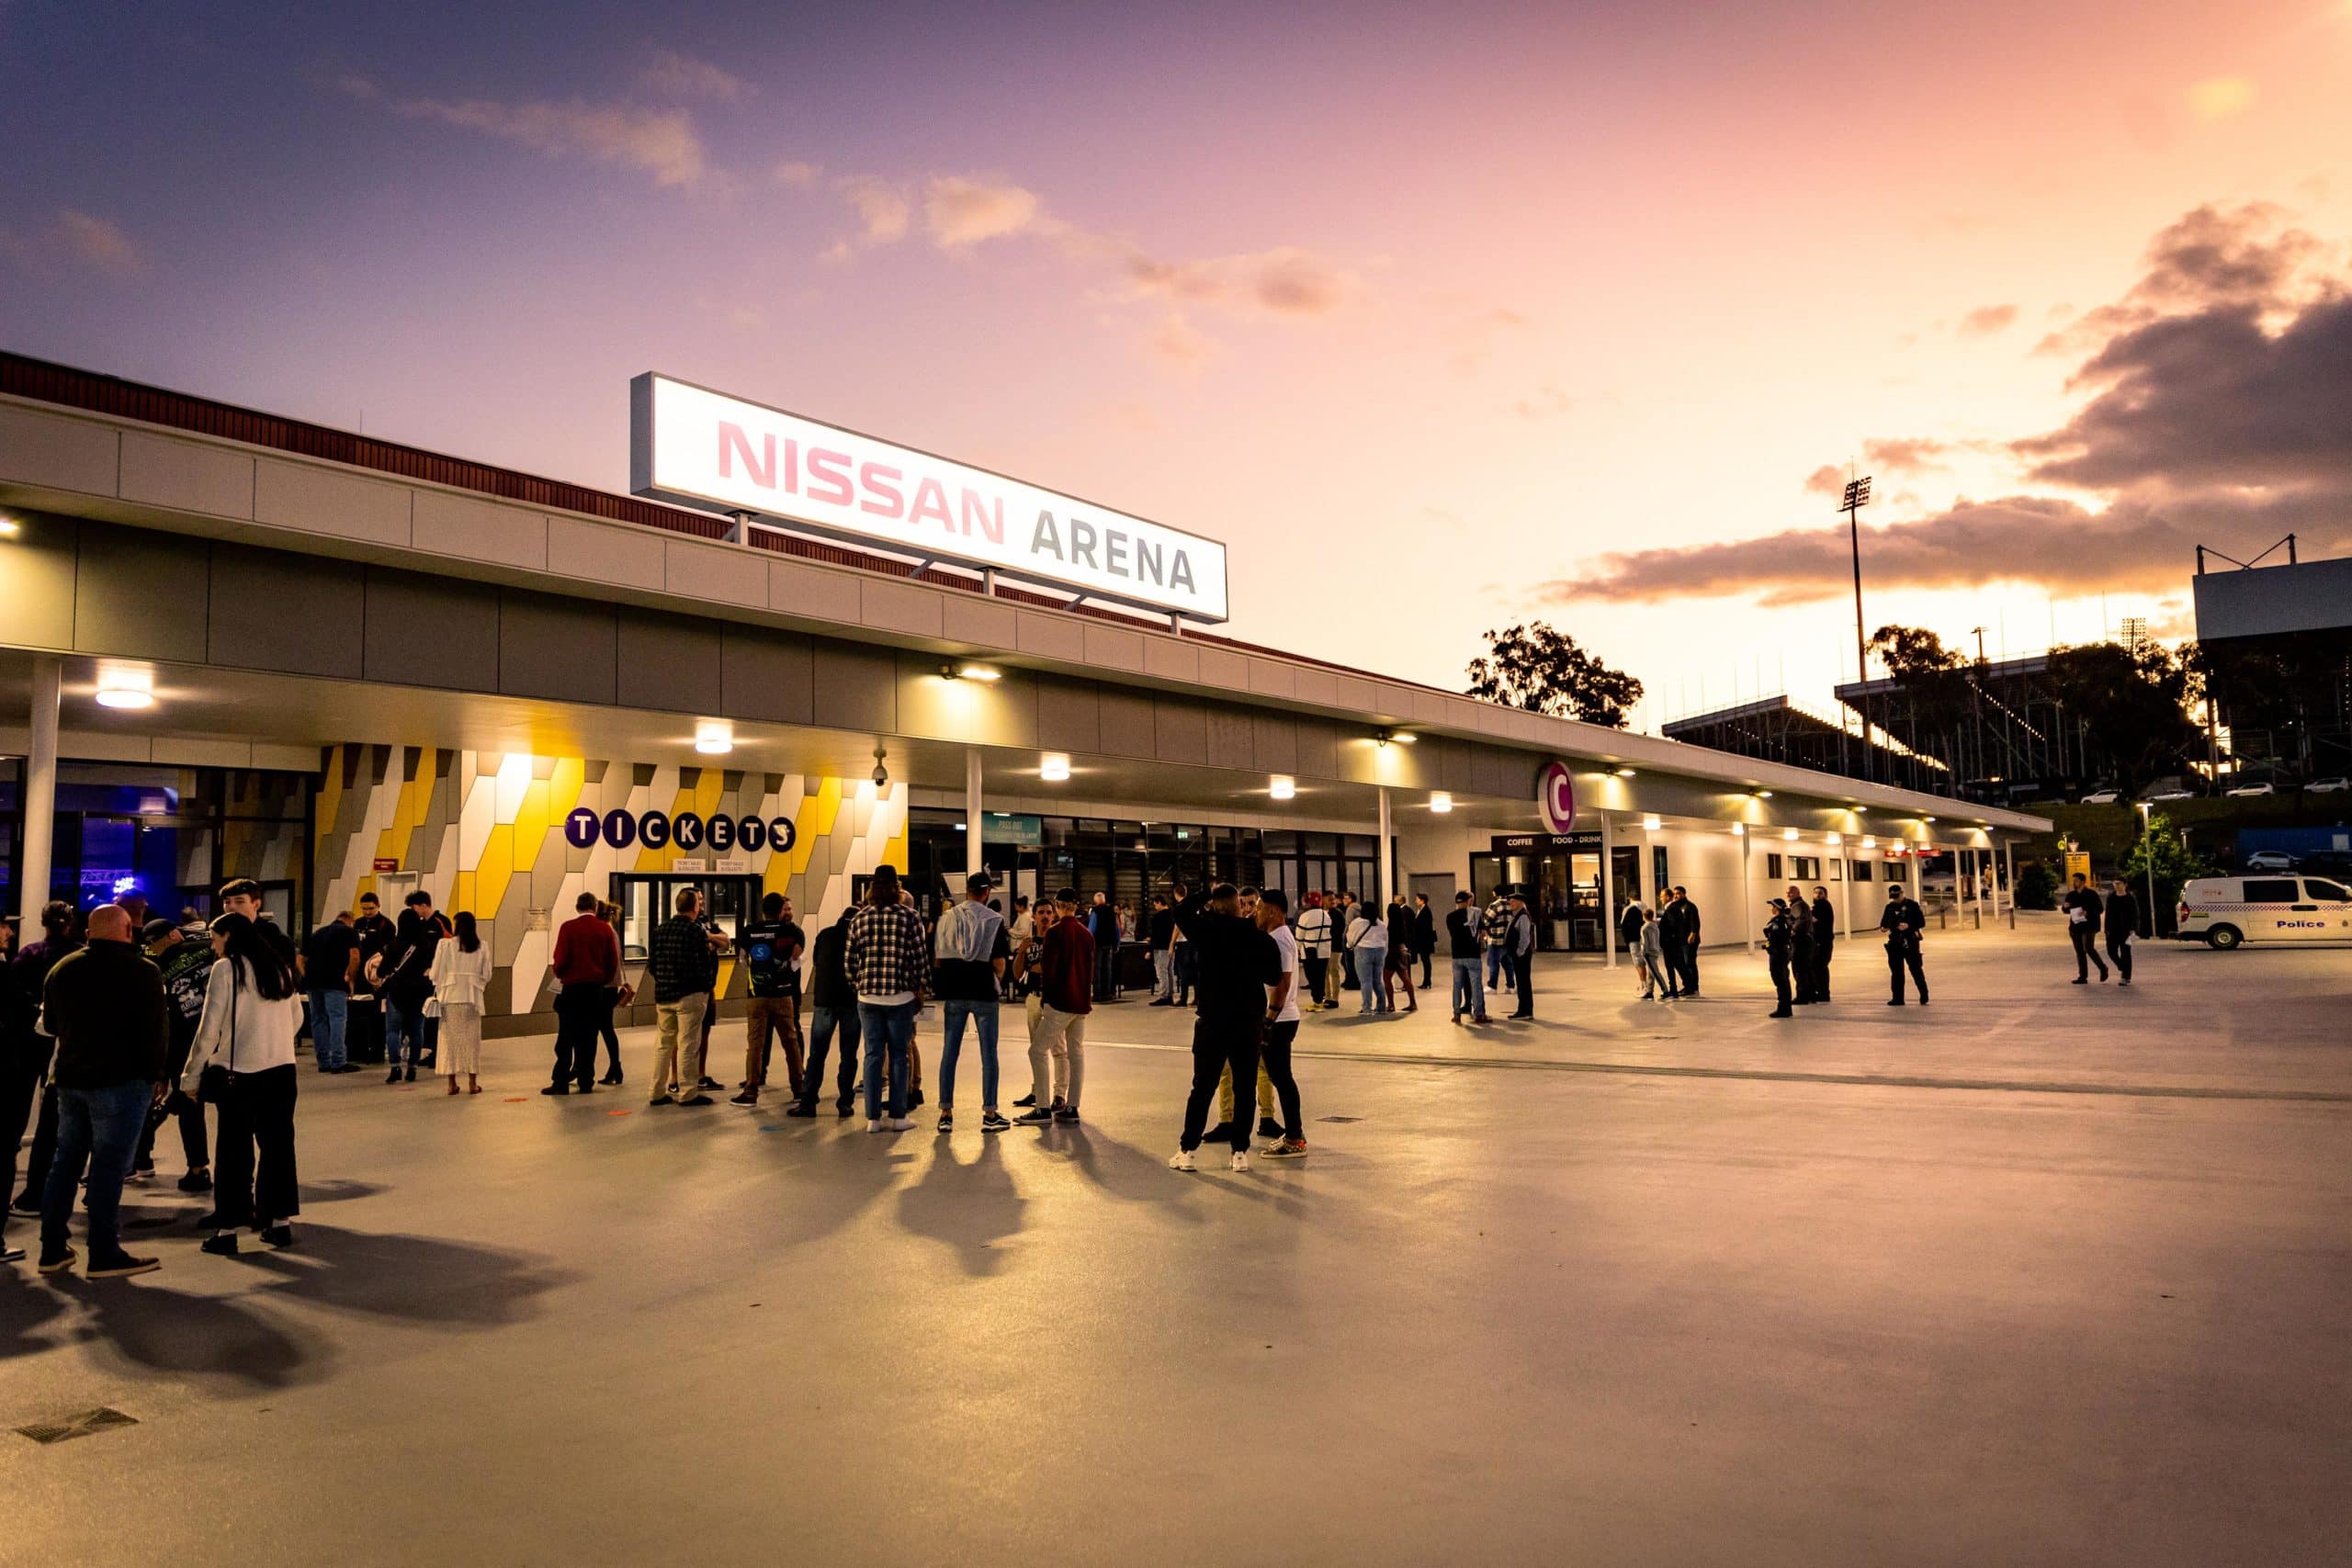 Nissan Arena at sunset